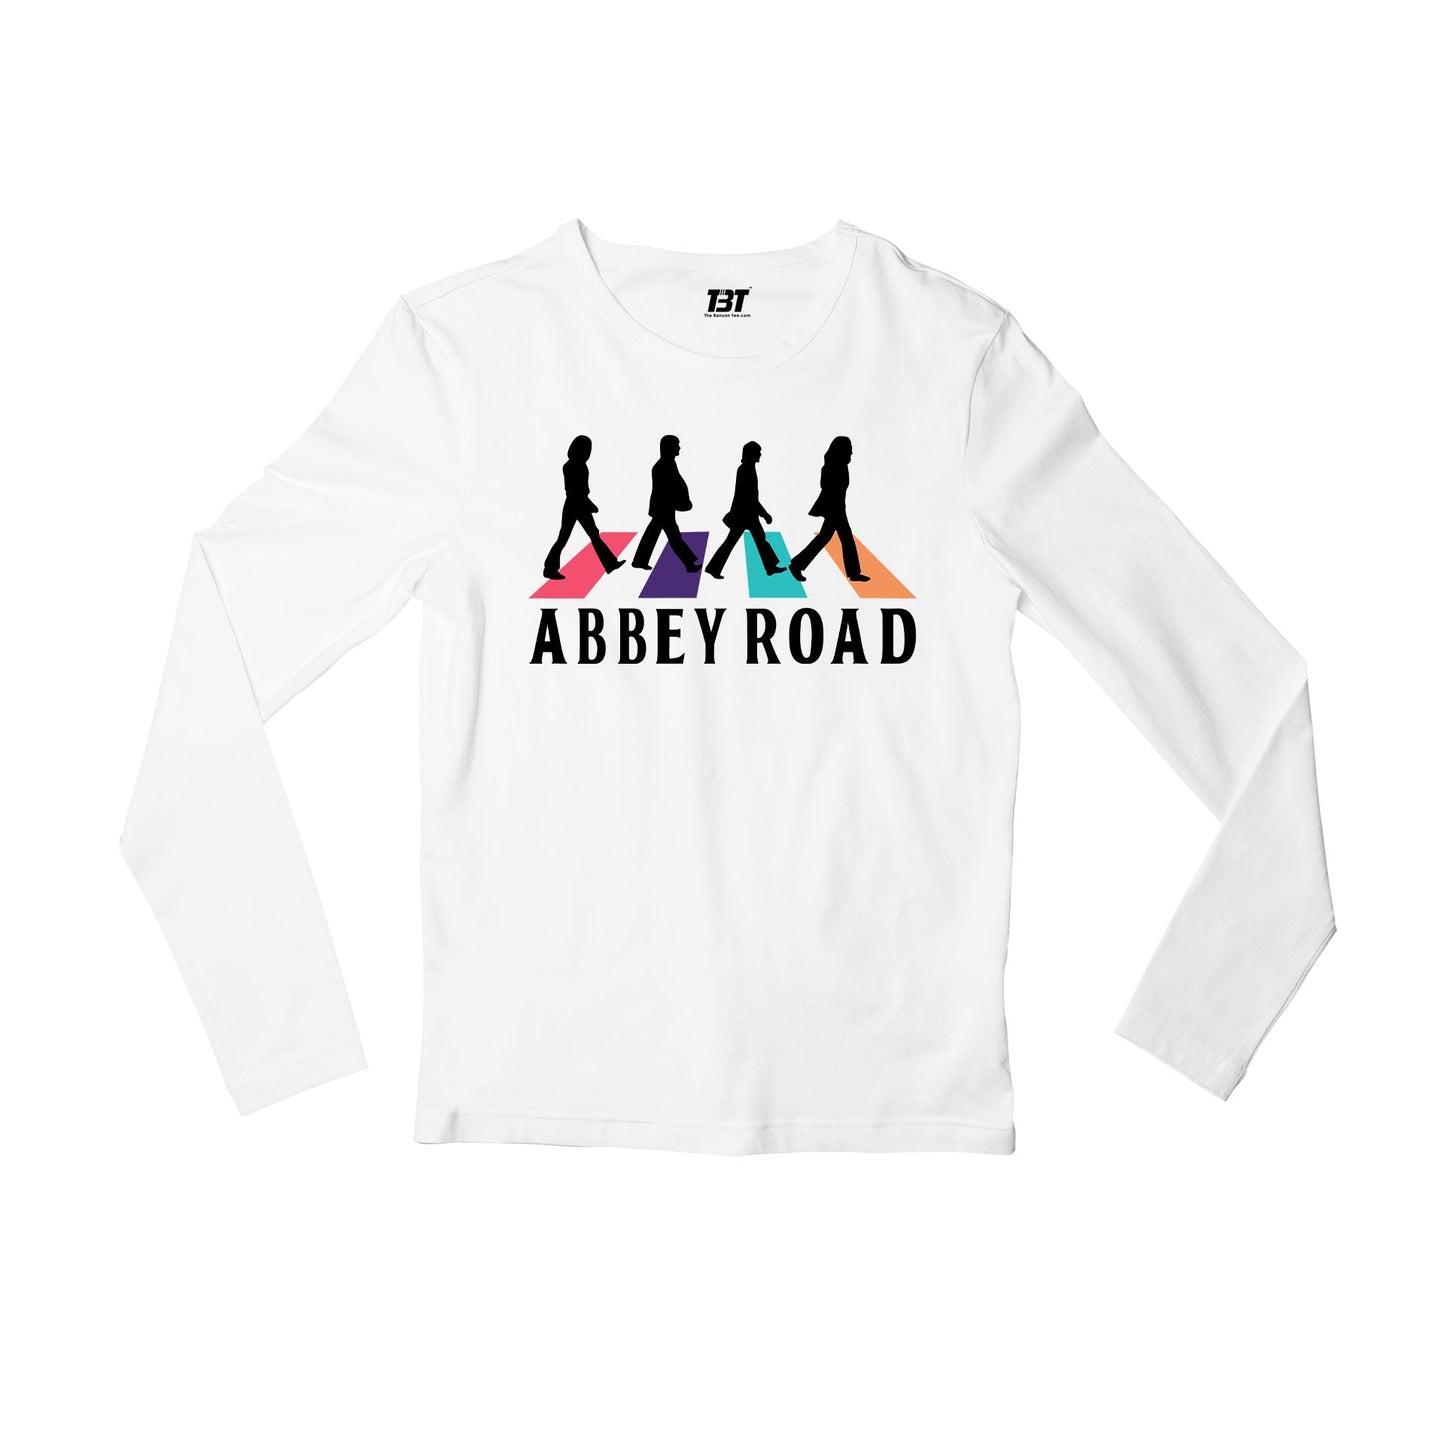 The Beatles Full Sleeves T-shirt Long Sleeves - Abbey Road Full Sleeves T-shirt Long Sleeves The Banyan Tee TBT